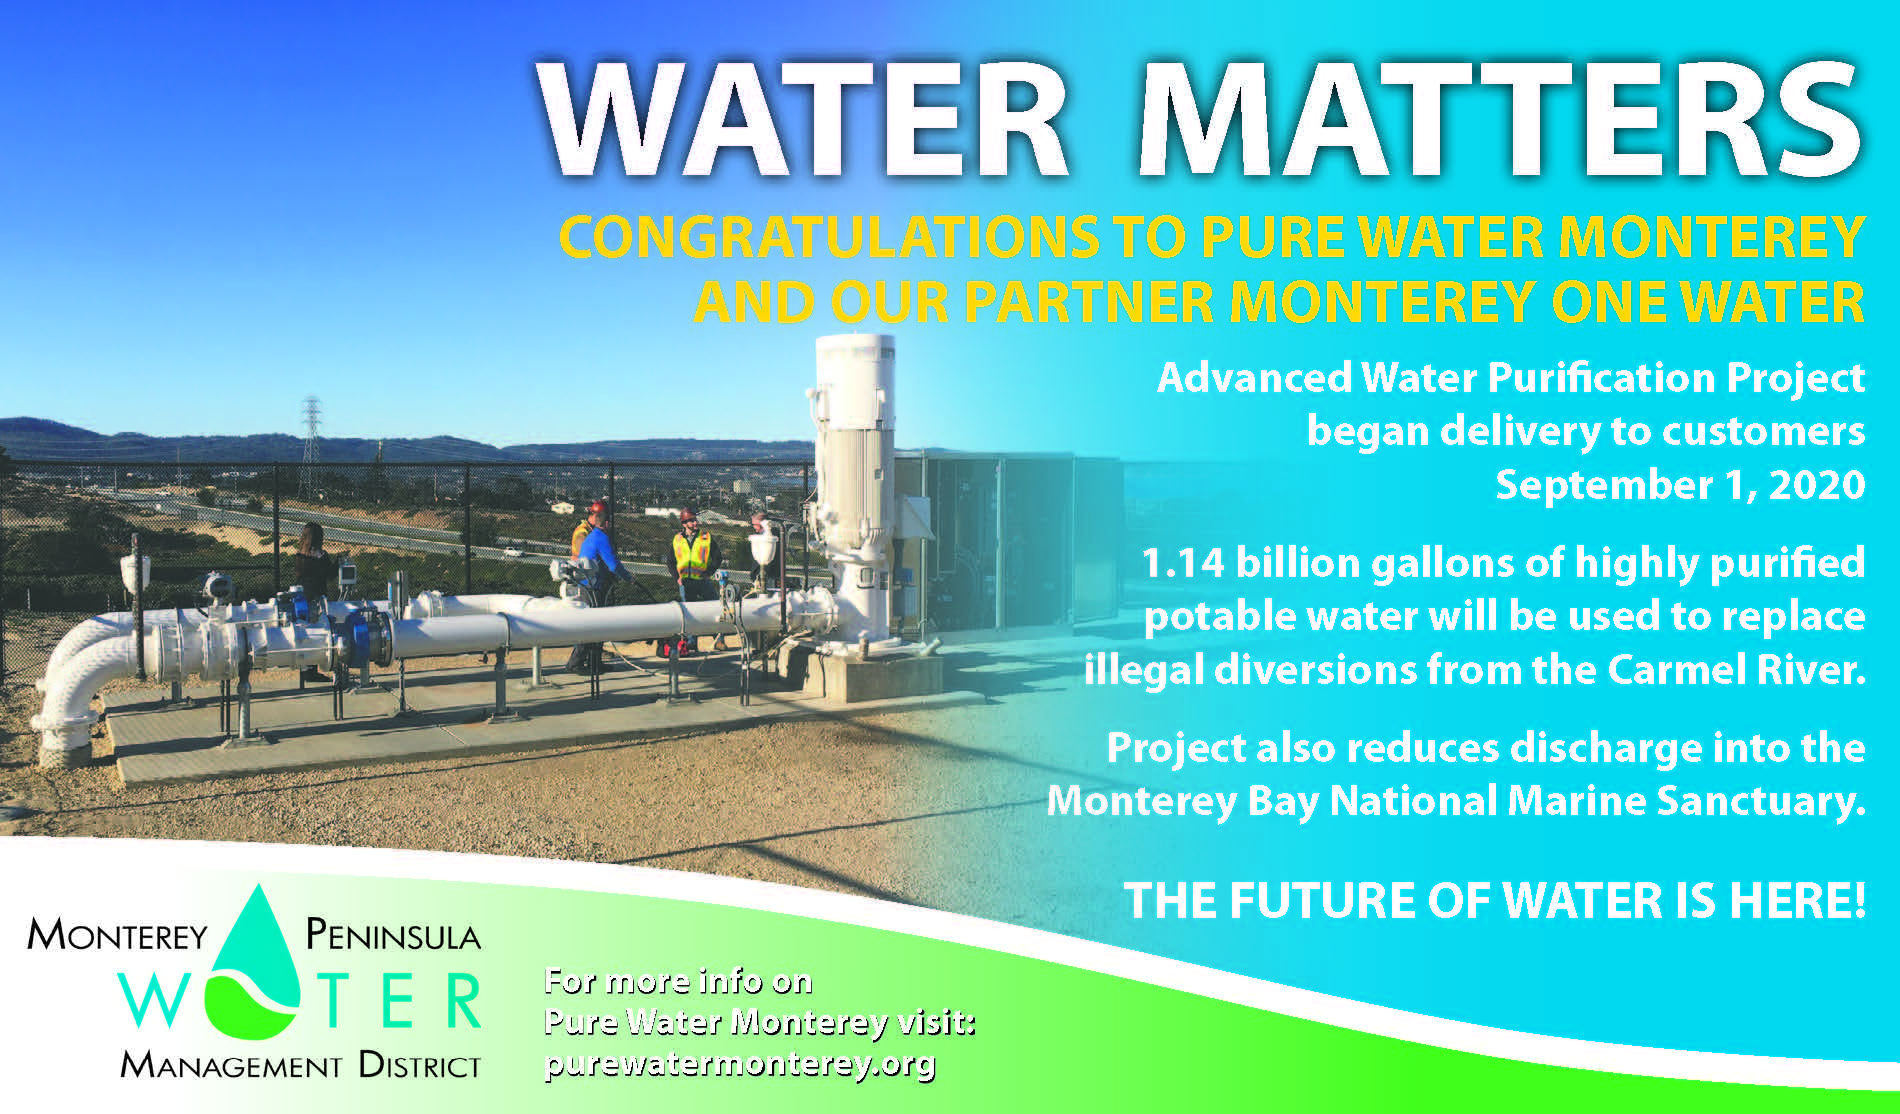 Congratulations Monterey Peninsula Water Management District